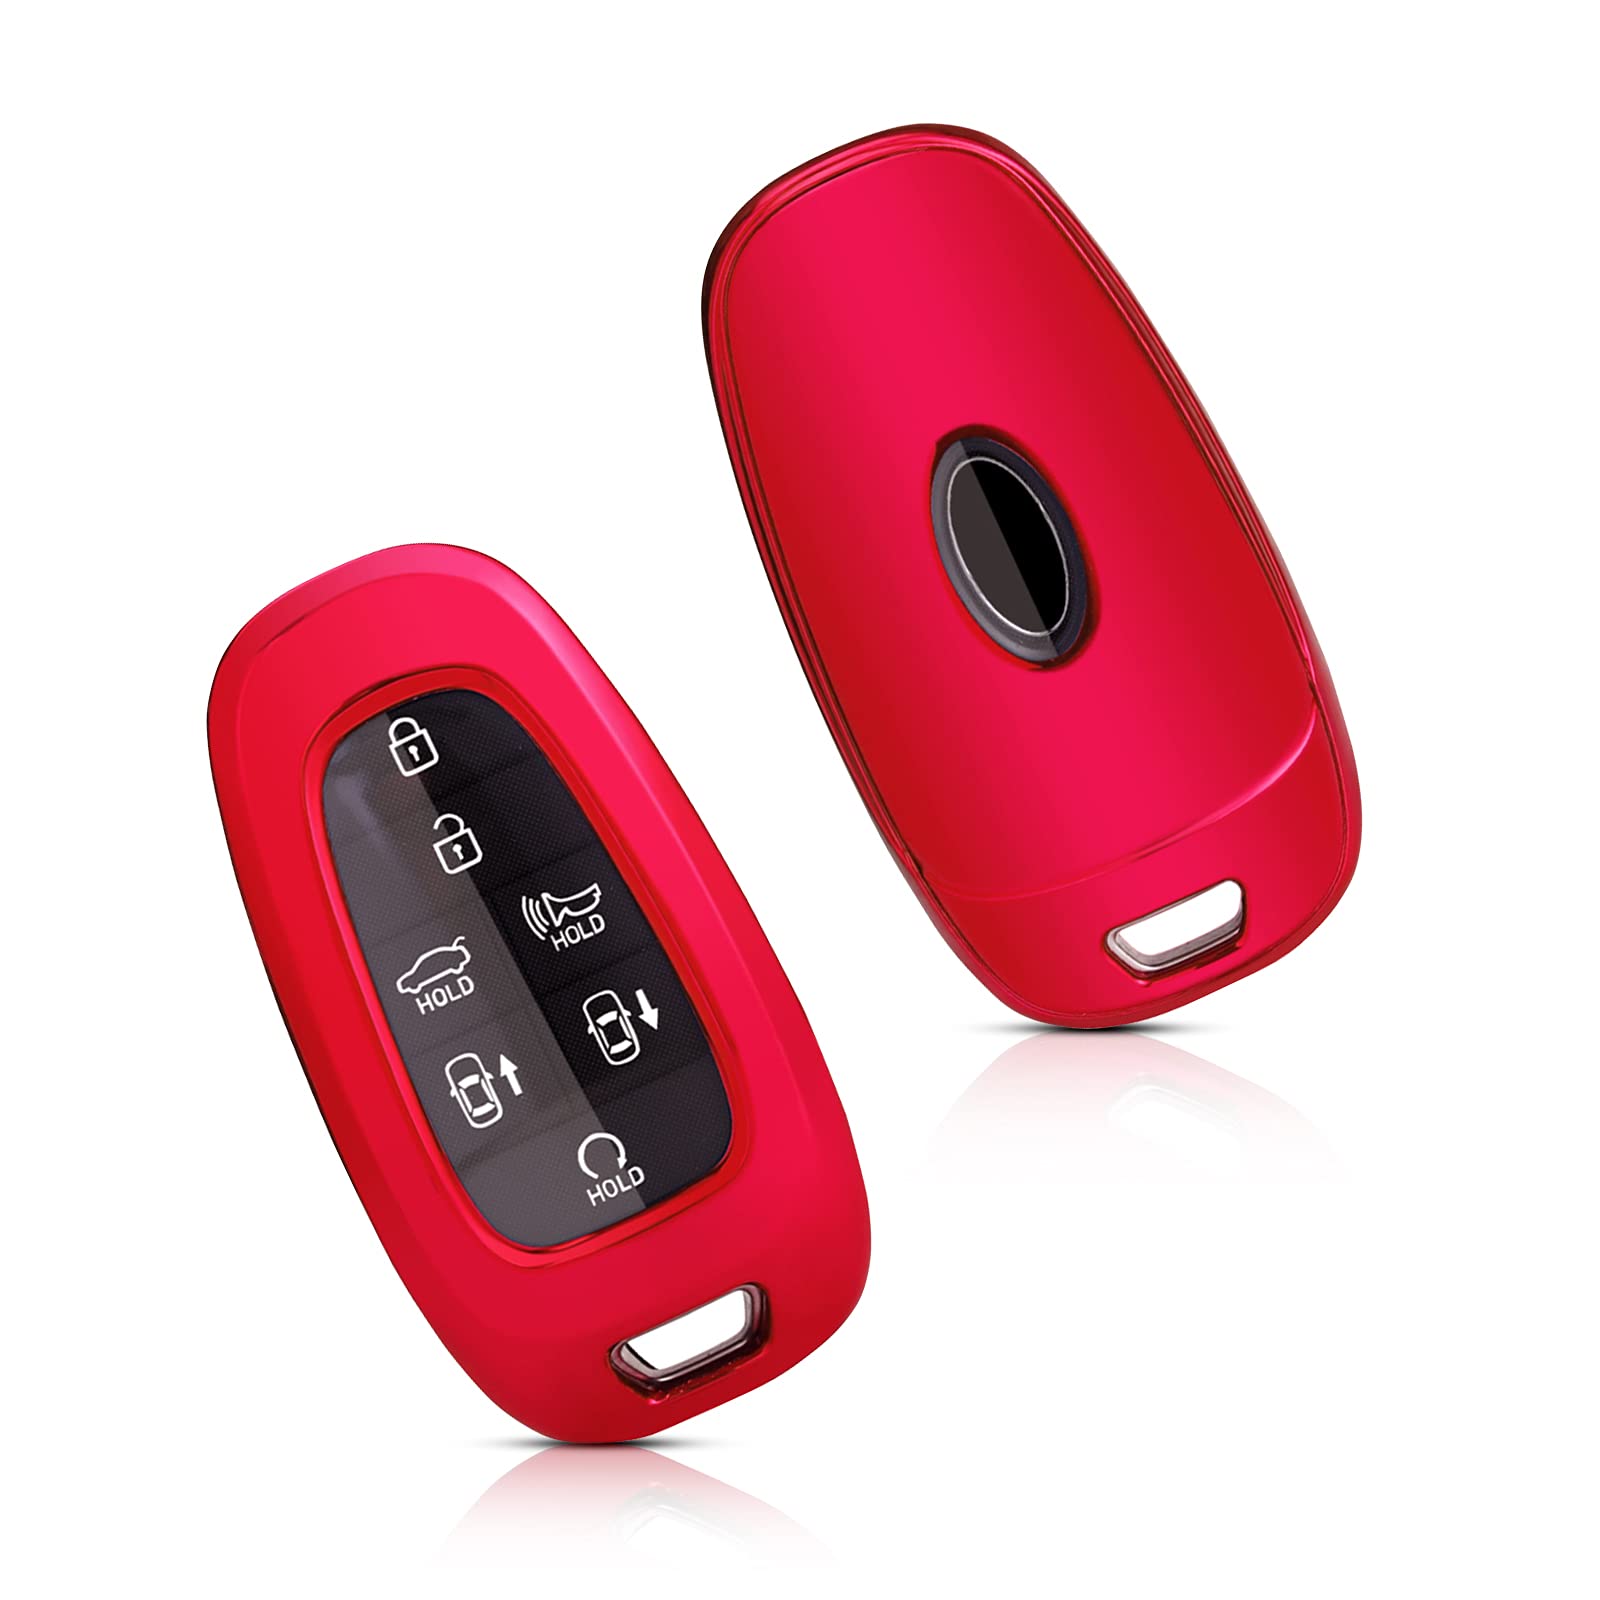 LFOTPP Tucon NX4 Schlüssel Hülle, TPU Silikon Autoschlüssel, Schlüsselhülle Schutzhülle Zubehör (Rot) von LFOTPP